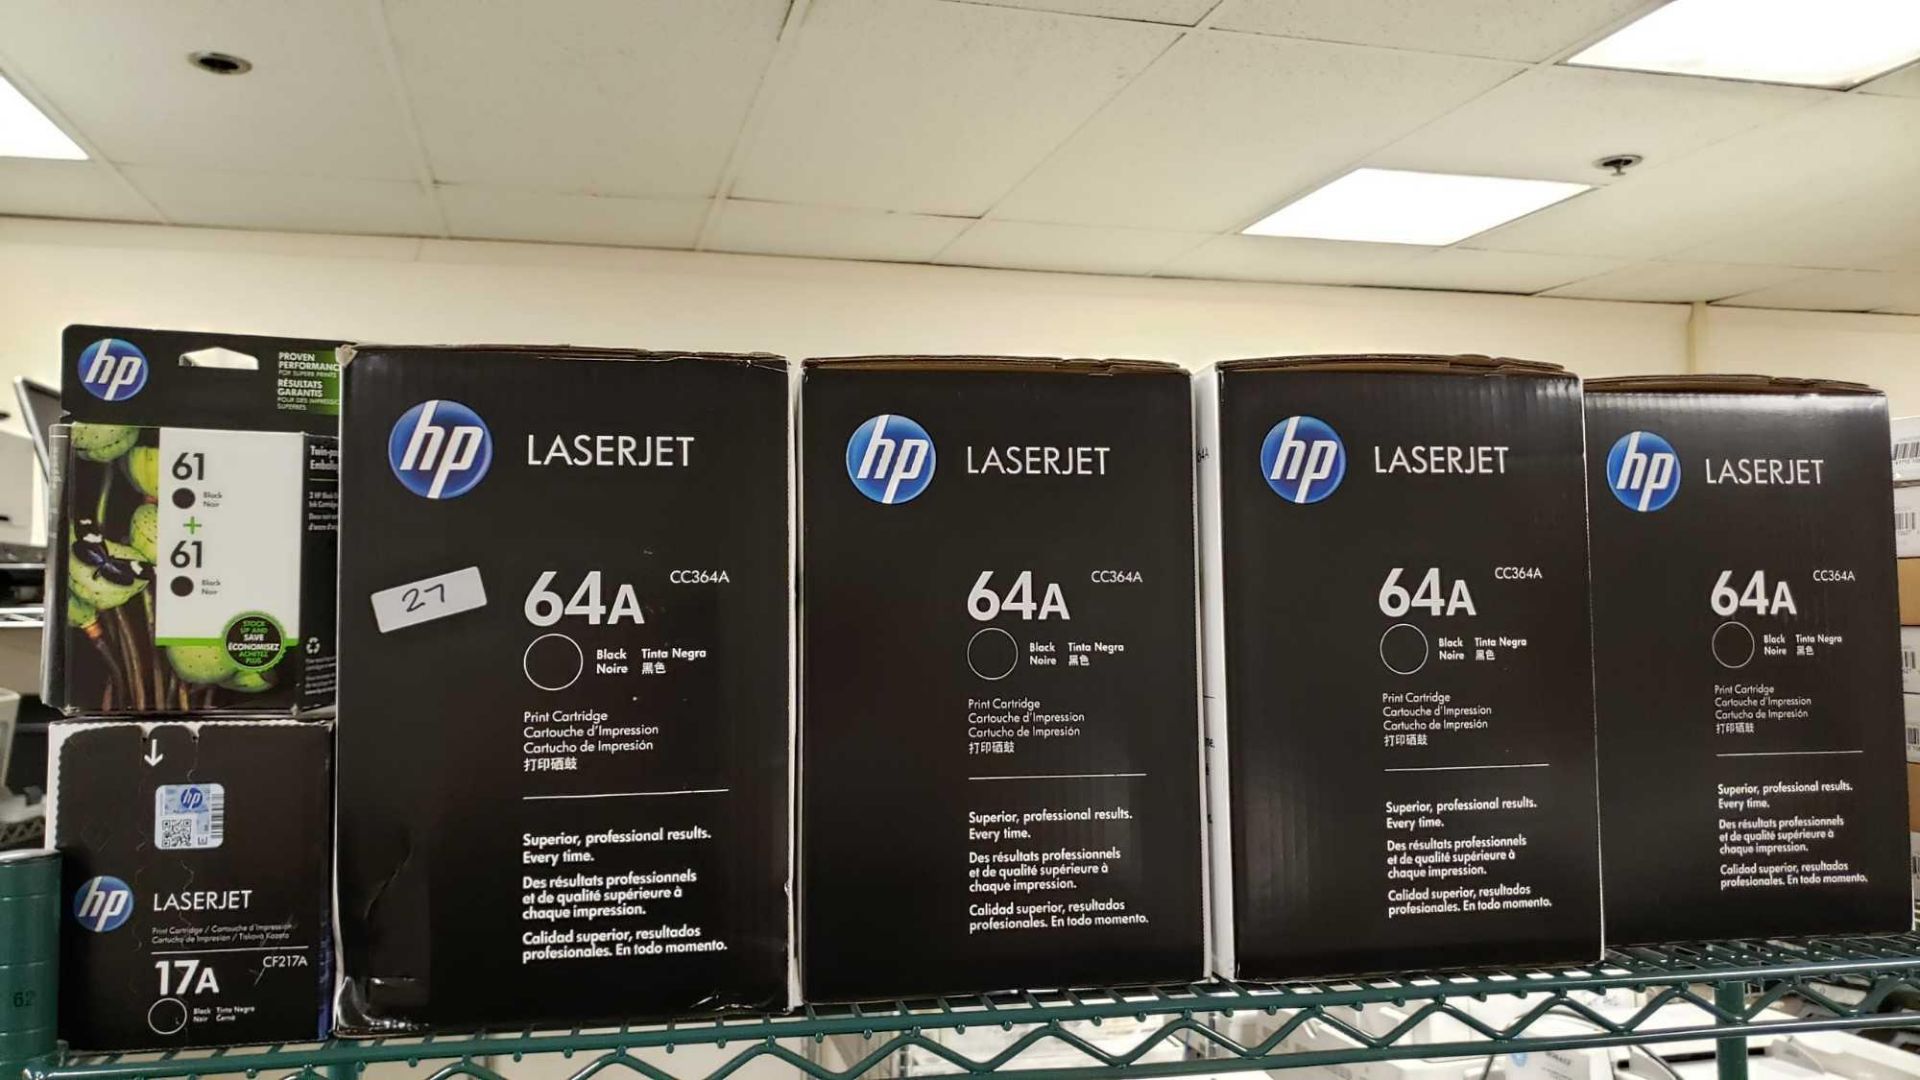 Lot of (4) HP Laserjet 64A, (1) 17A, (1) 61 Toners